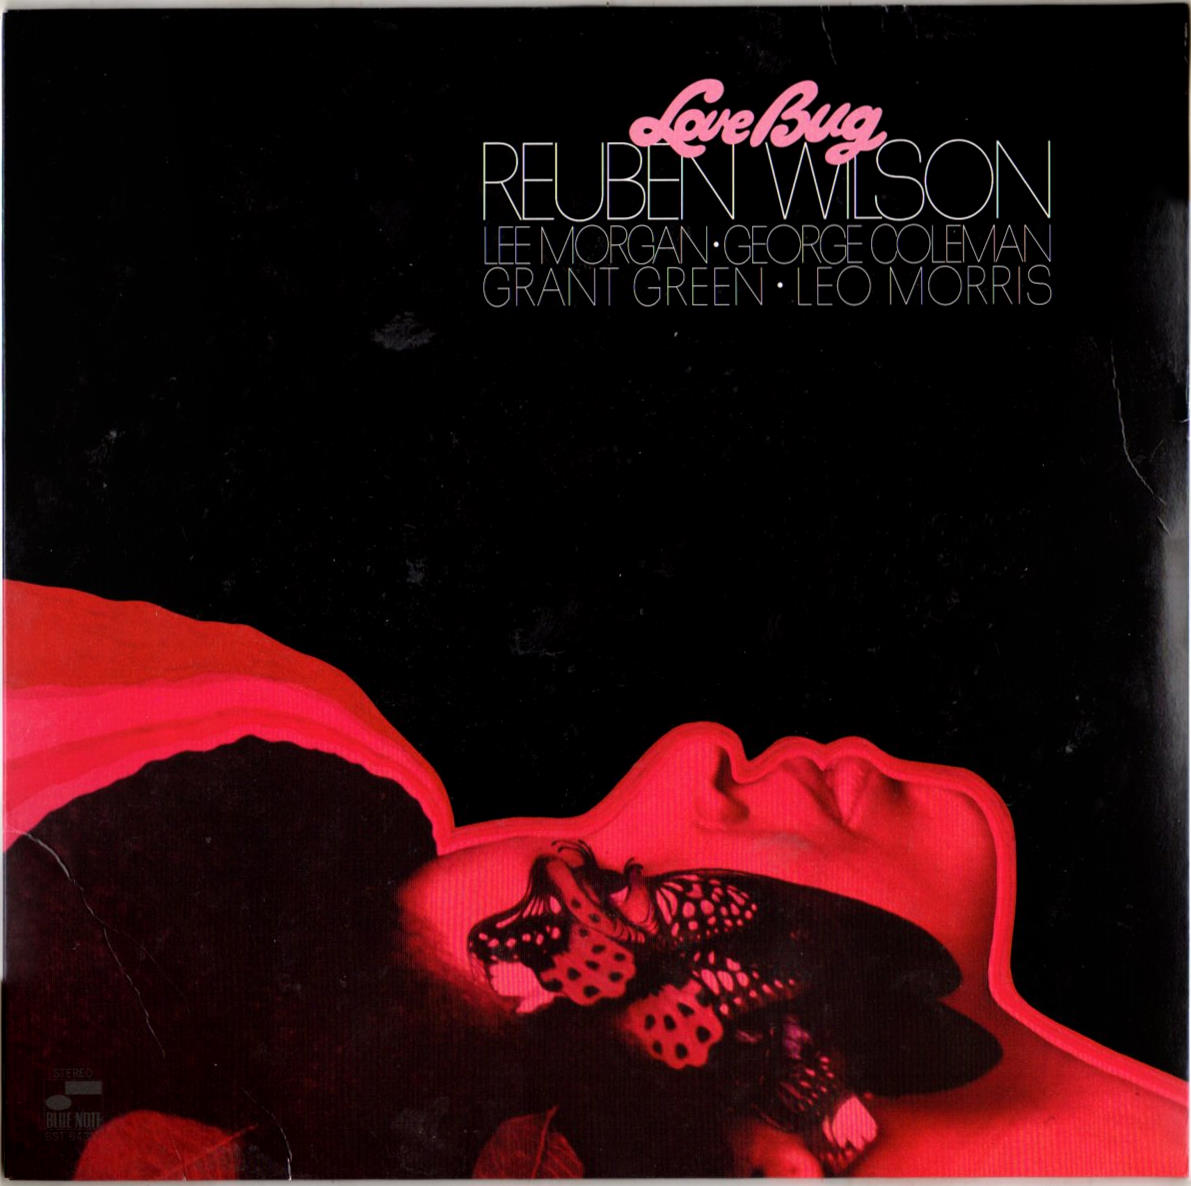 Reuben Wilson Jazz/Funk Organ Classic LP 